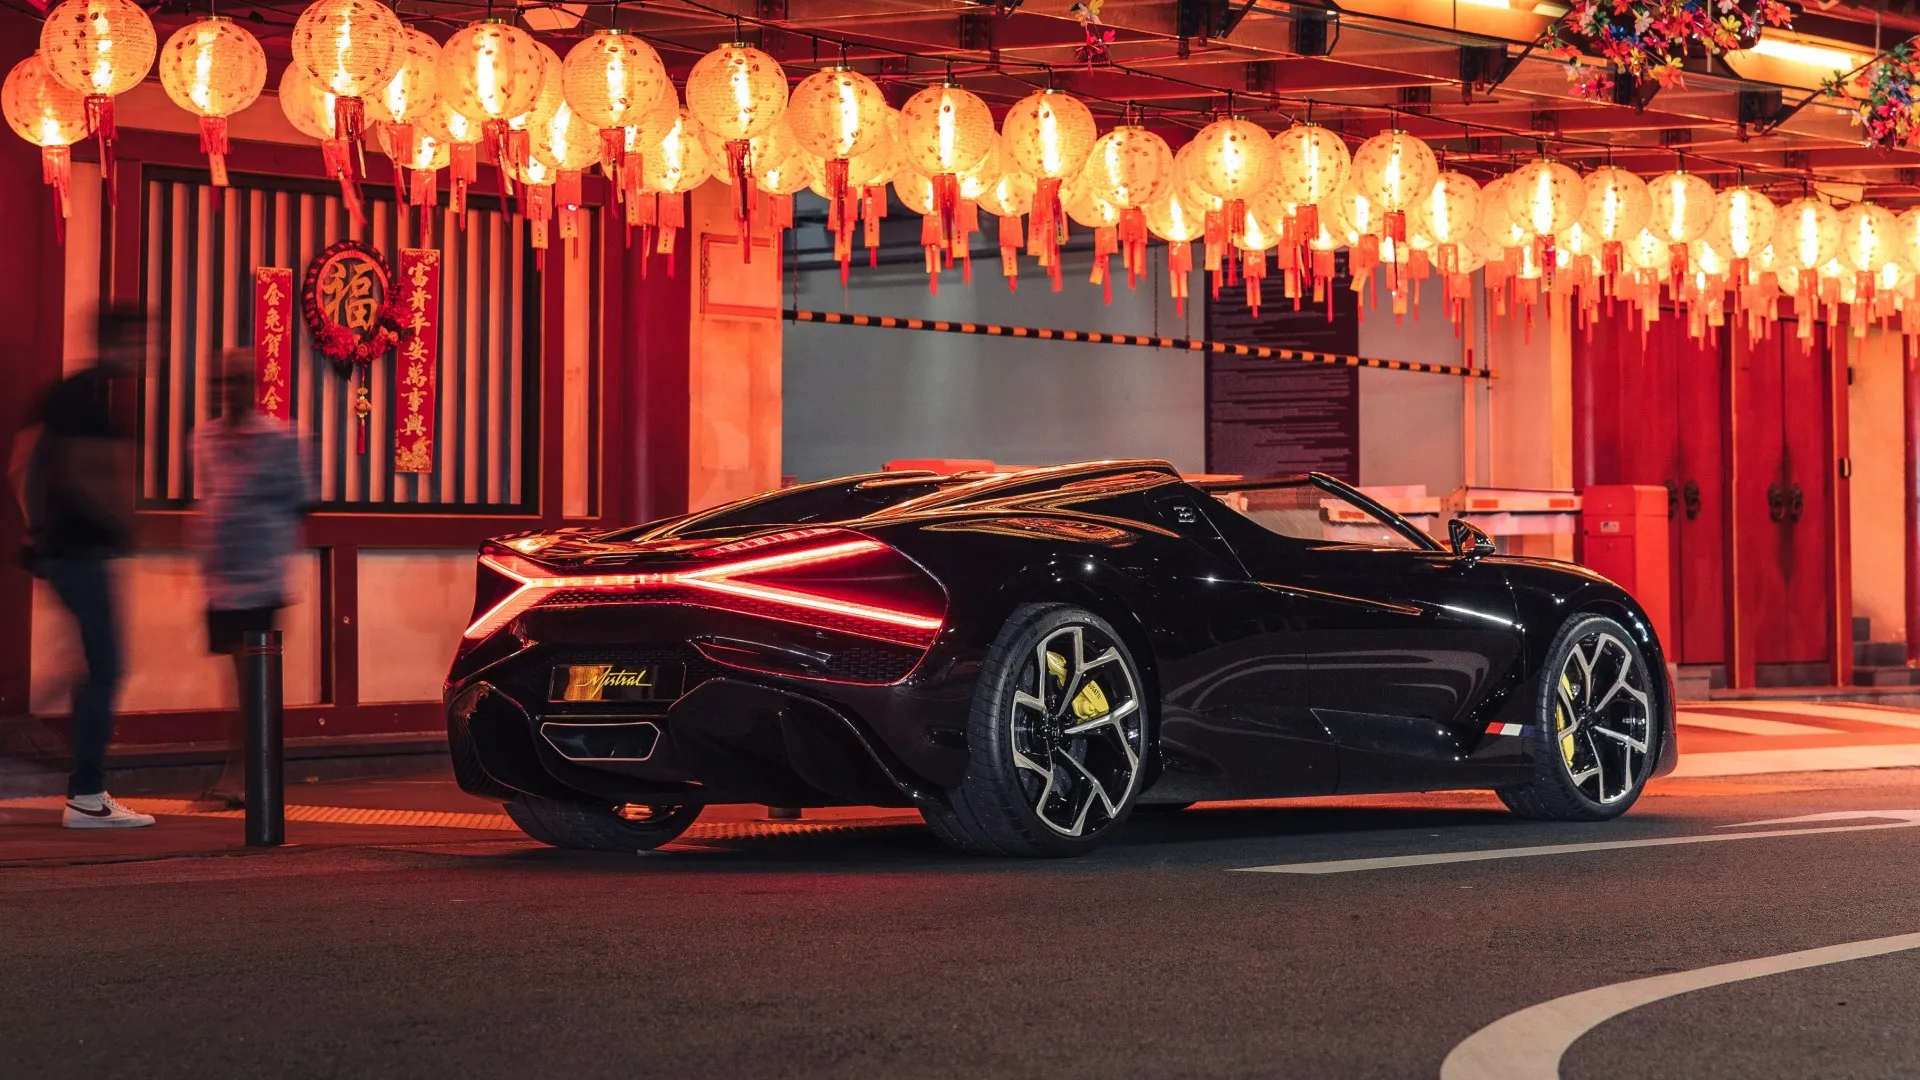 Sinceramente, el Bugatti Mistral luce espectacular en Singapur